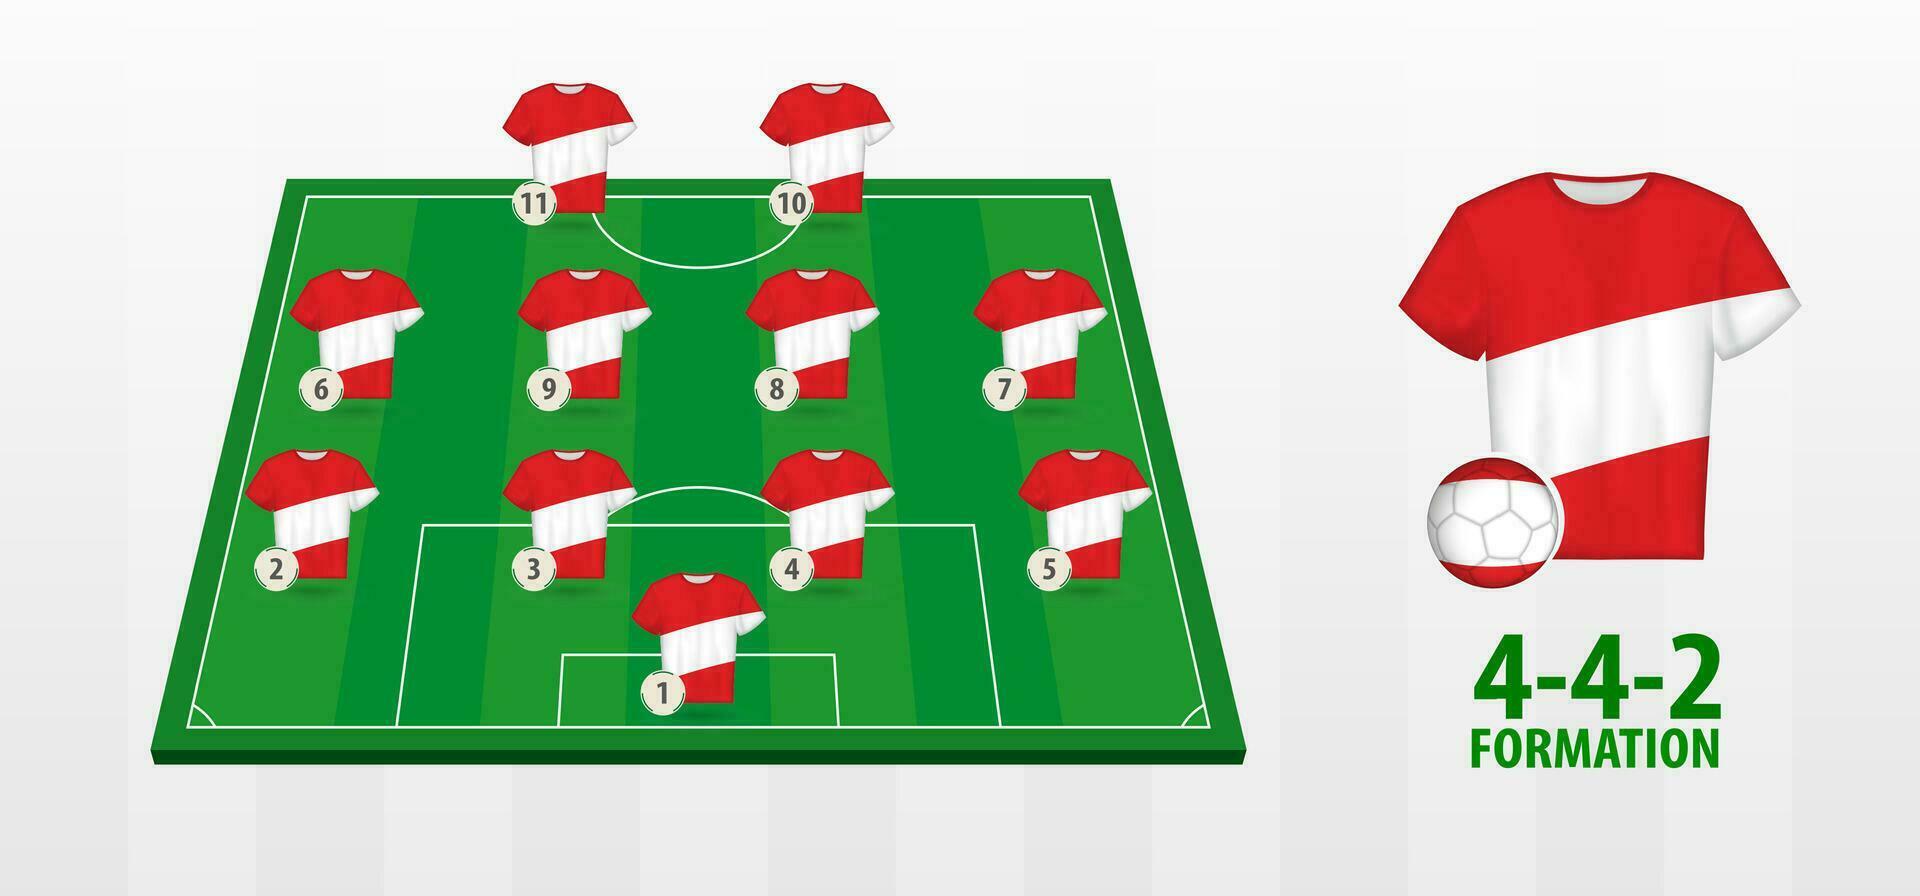 Austria National Football Team Formation on Football Field. vector